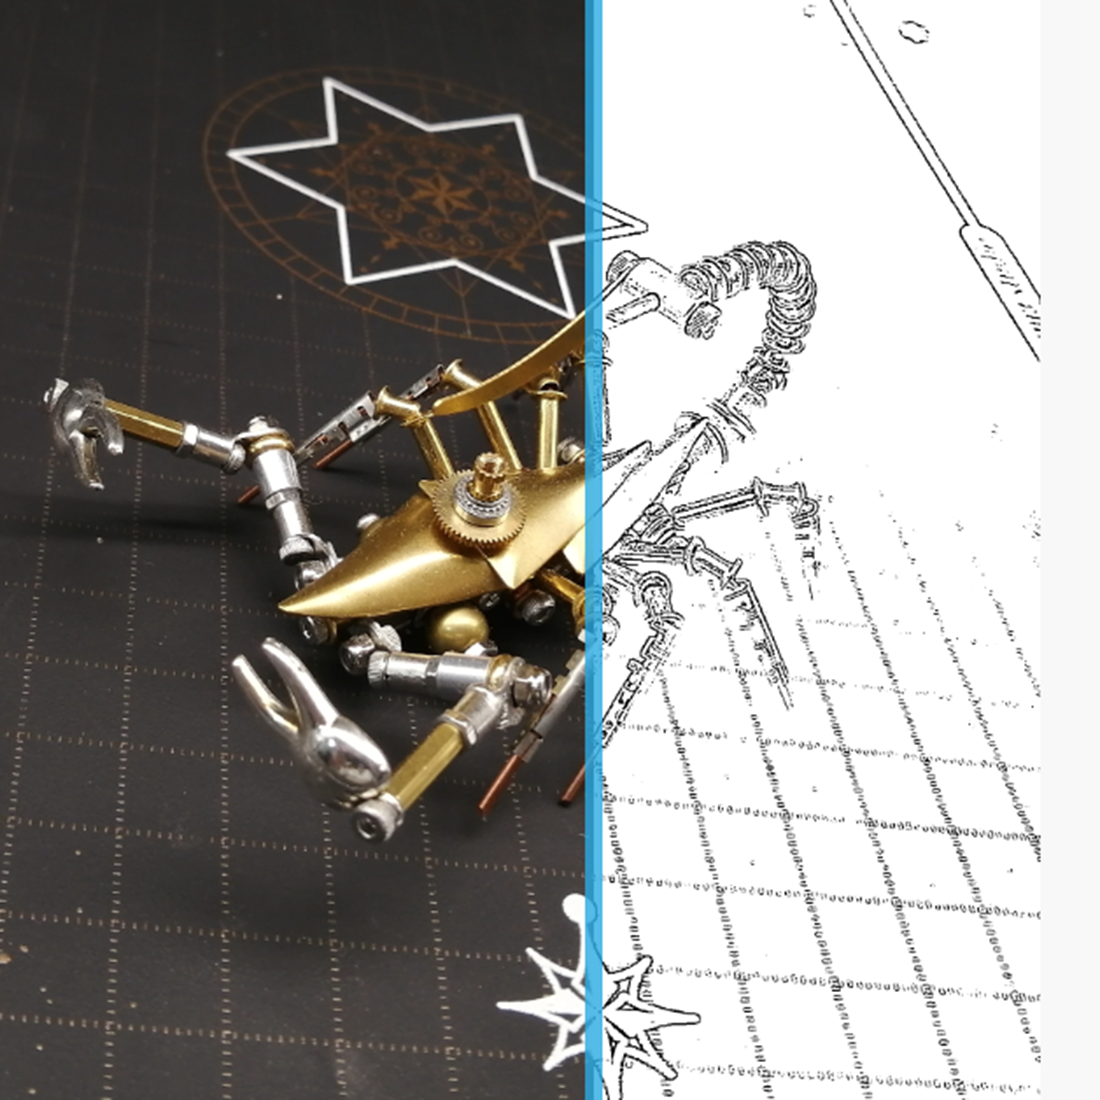 3D Metal Kits Mechanical DIY Scorpion Assembly Model 200+PCS